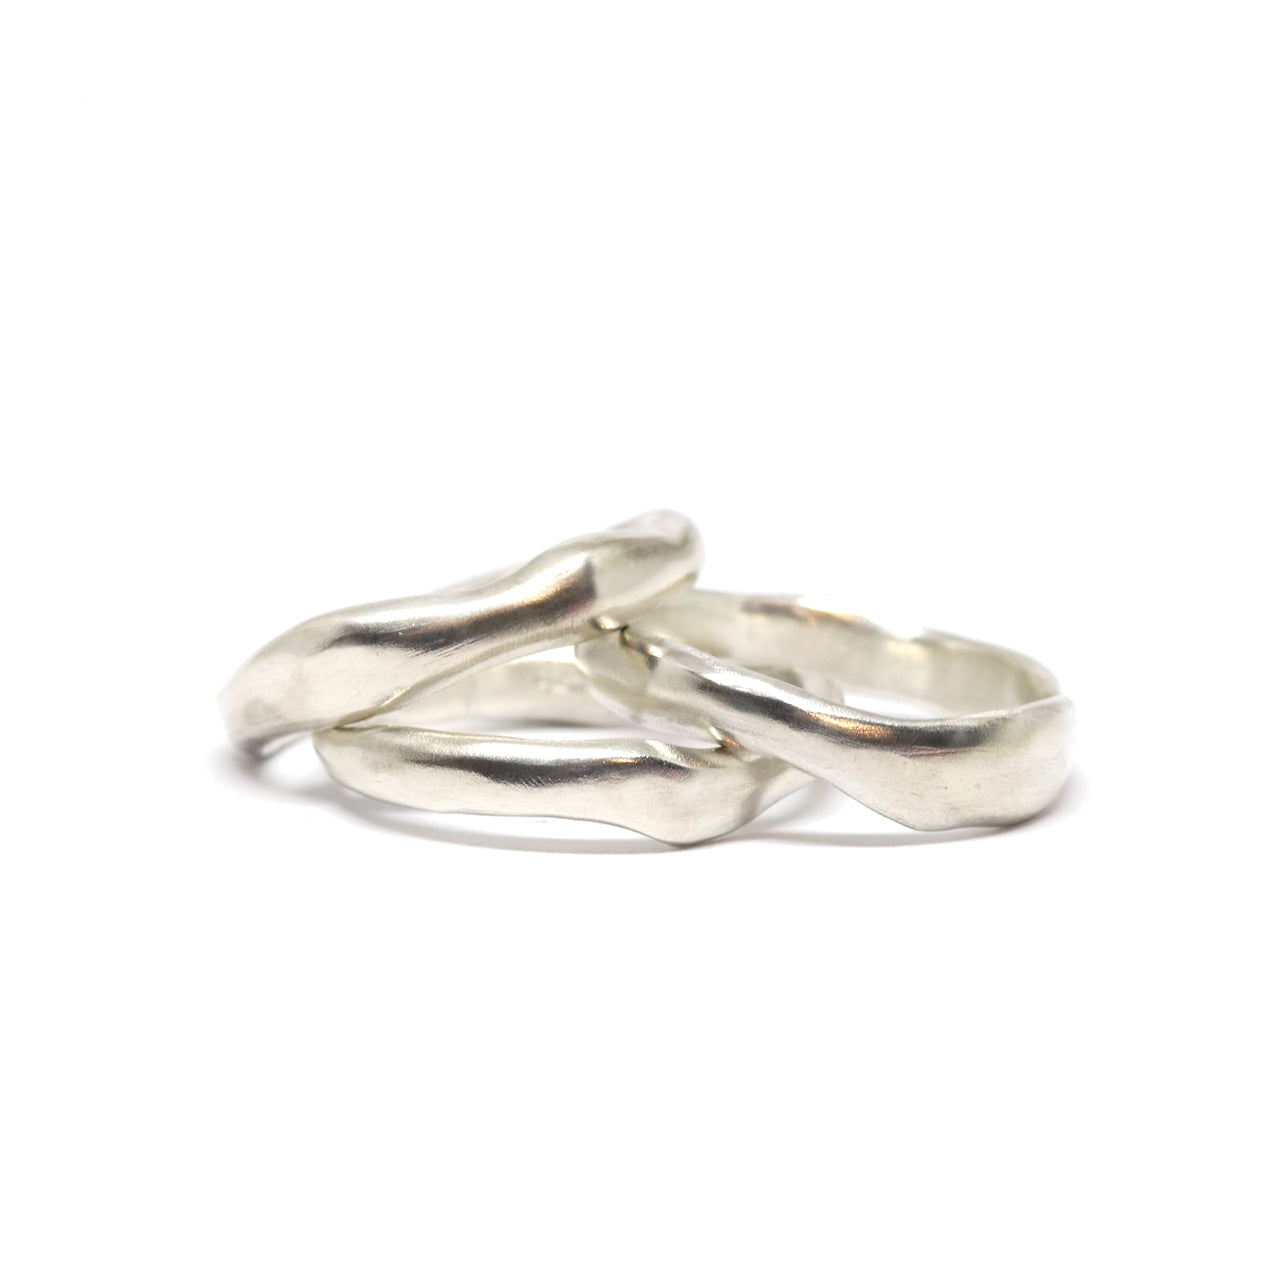 Waterworn sterling silver rings, jewellery made in Wānaka by Fruit Bowl Studio